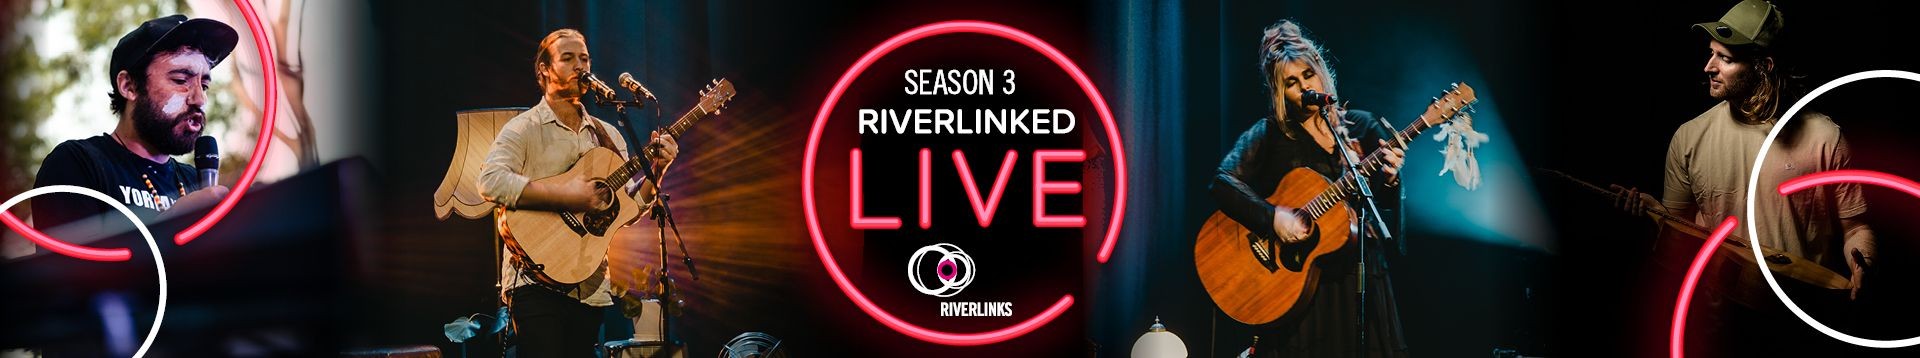 RiverLinked Live Season 3